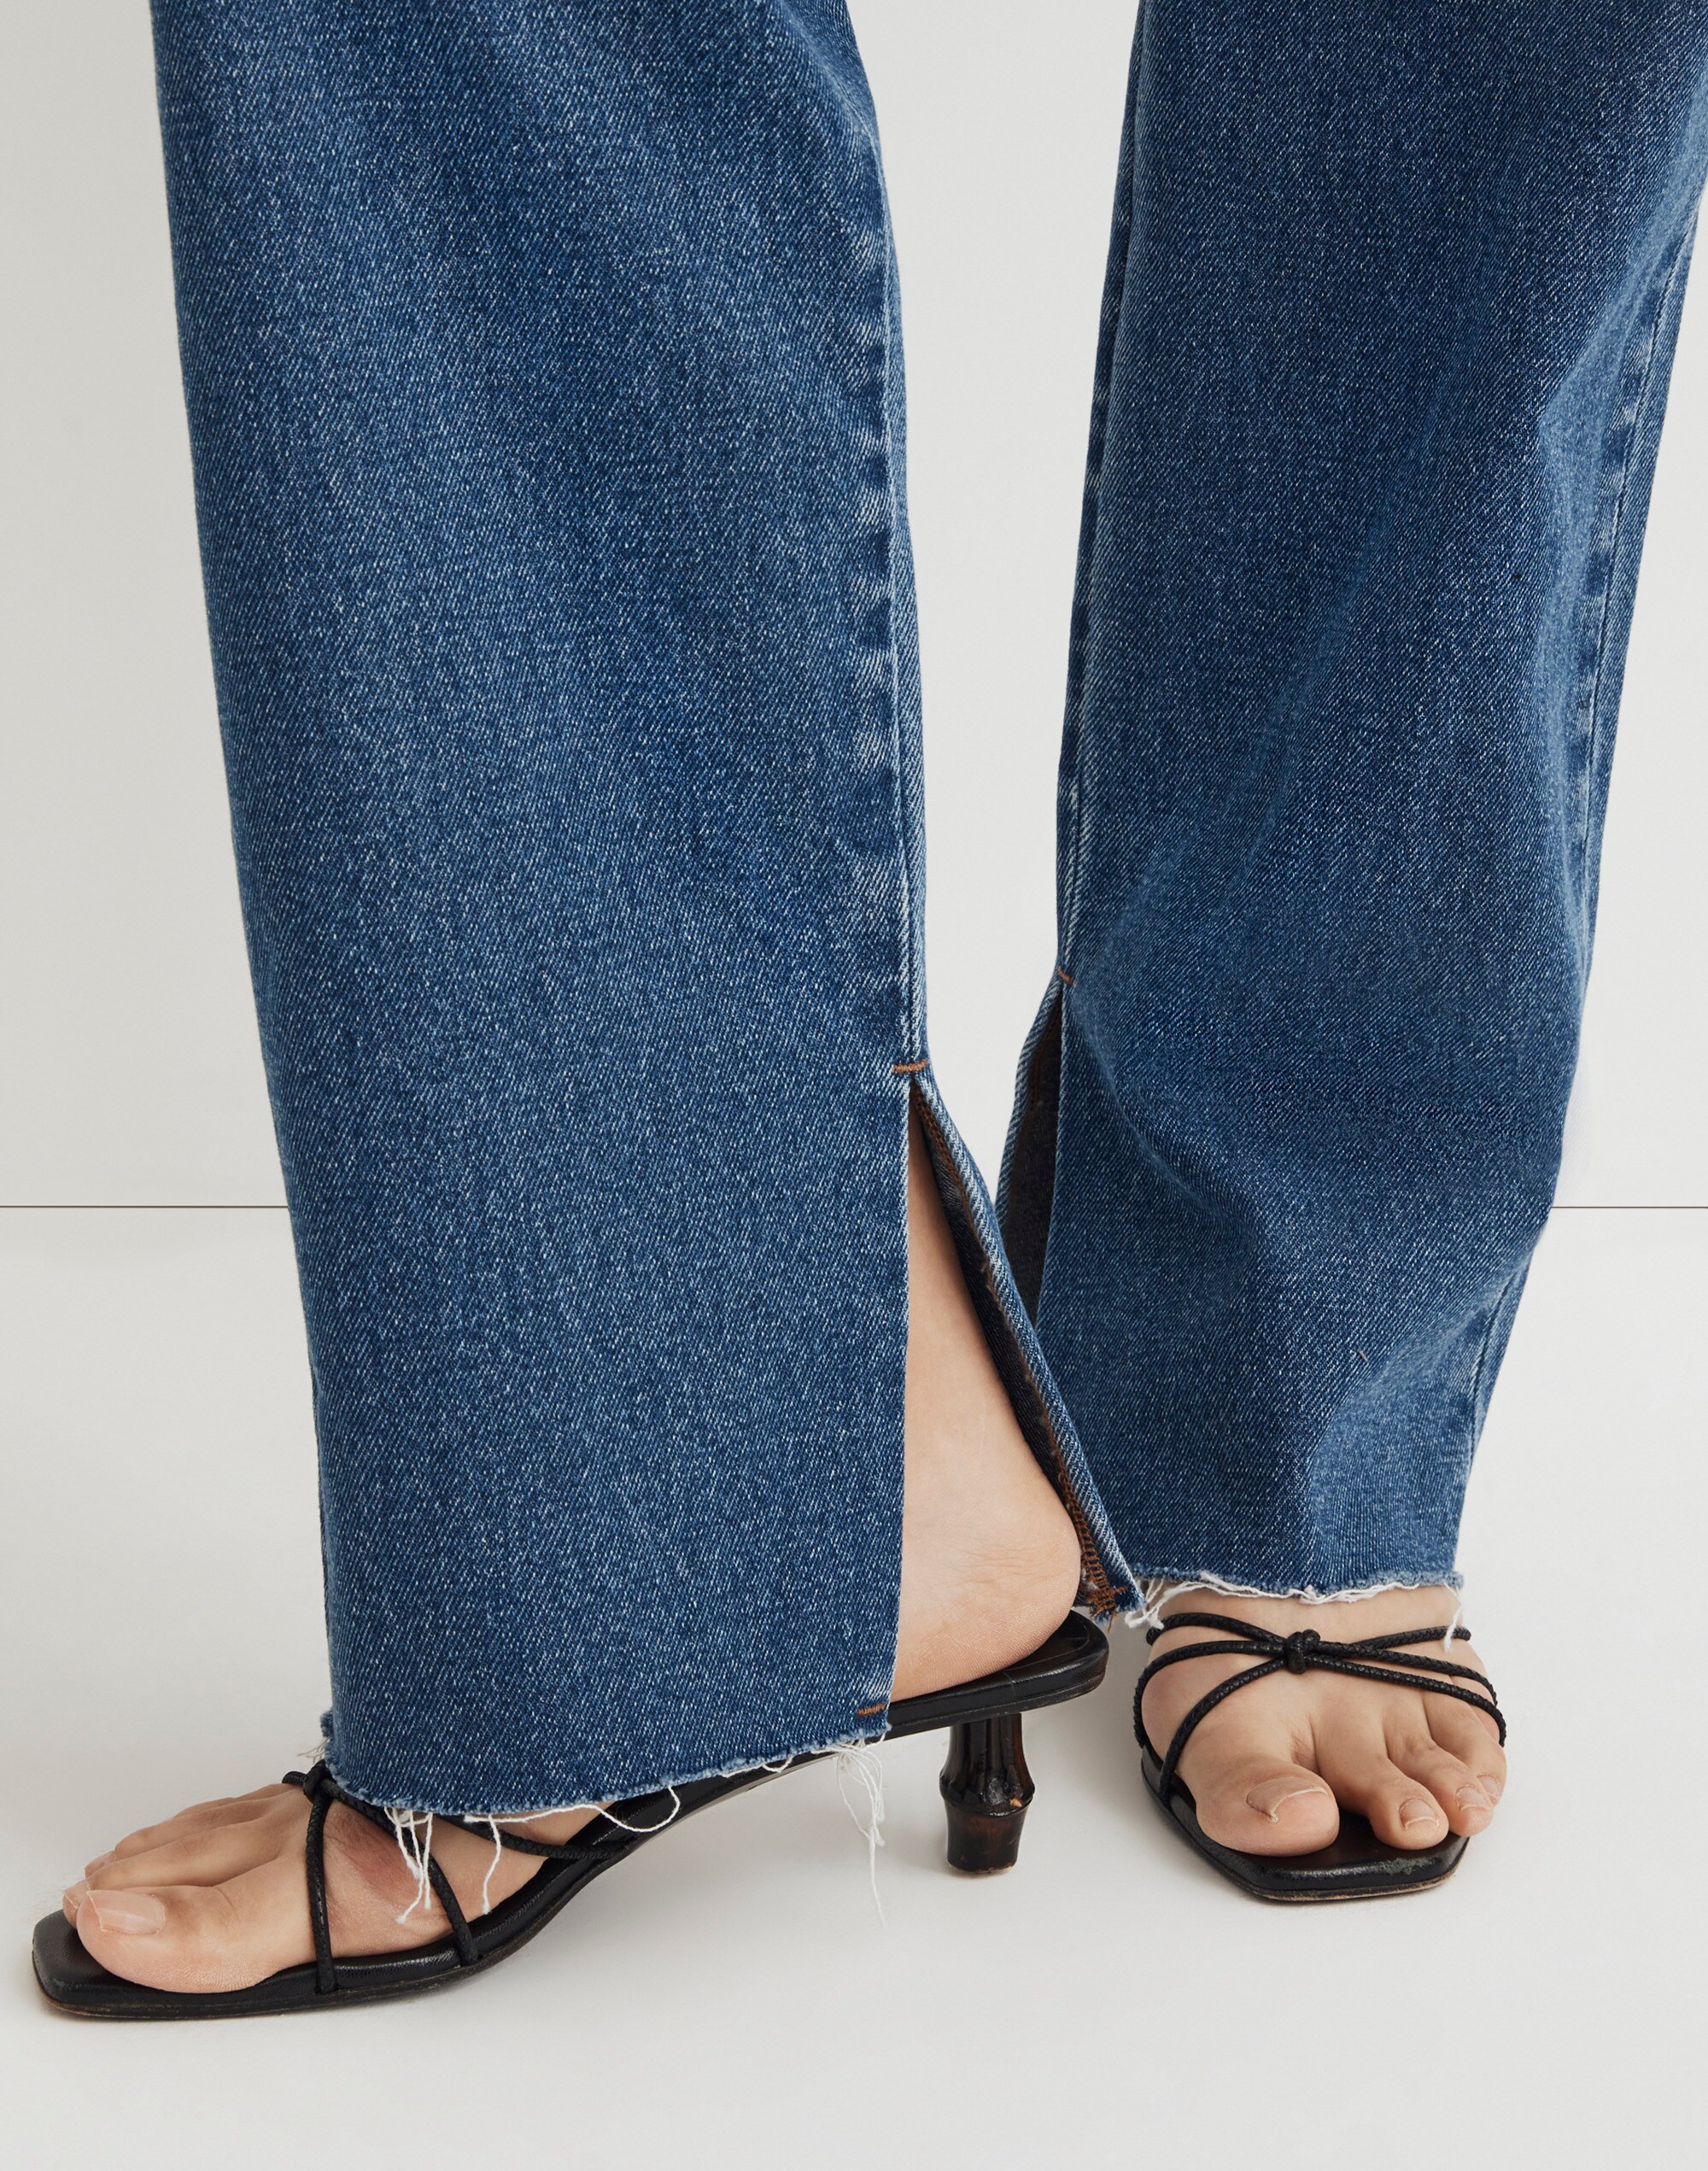 Baggy Straight Jeans Penton Wash: Raw-Hem Edition